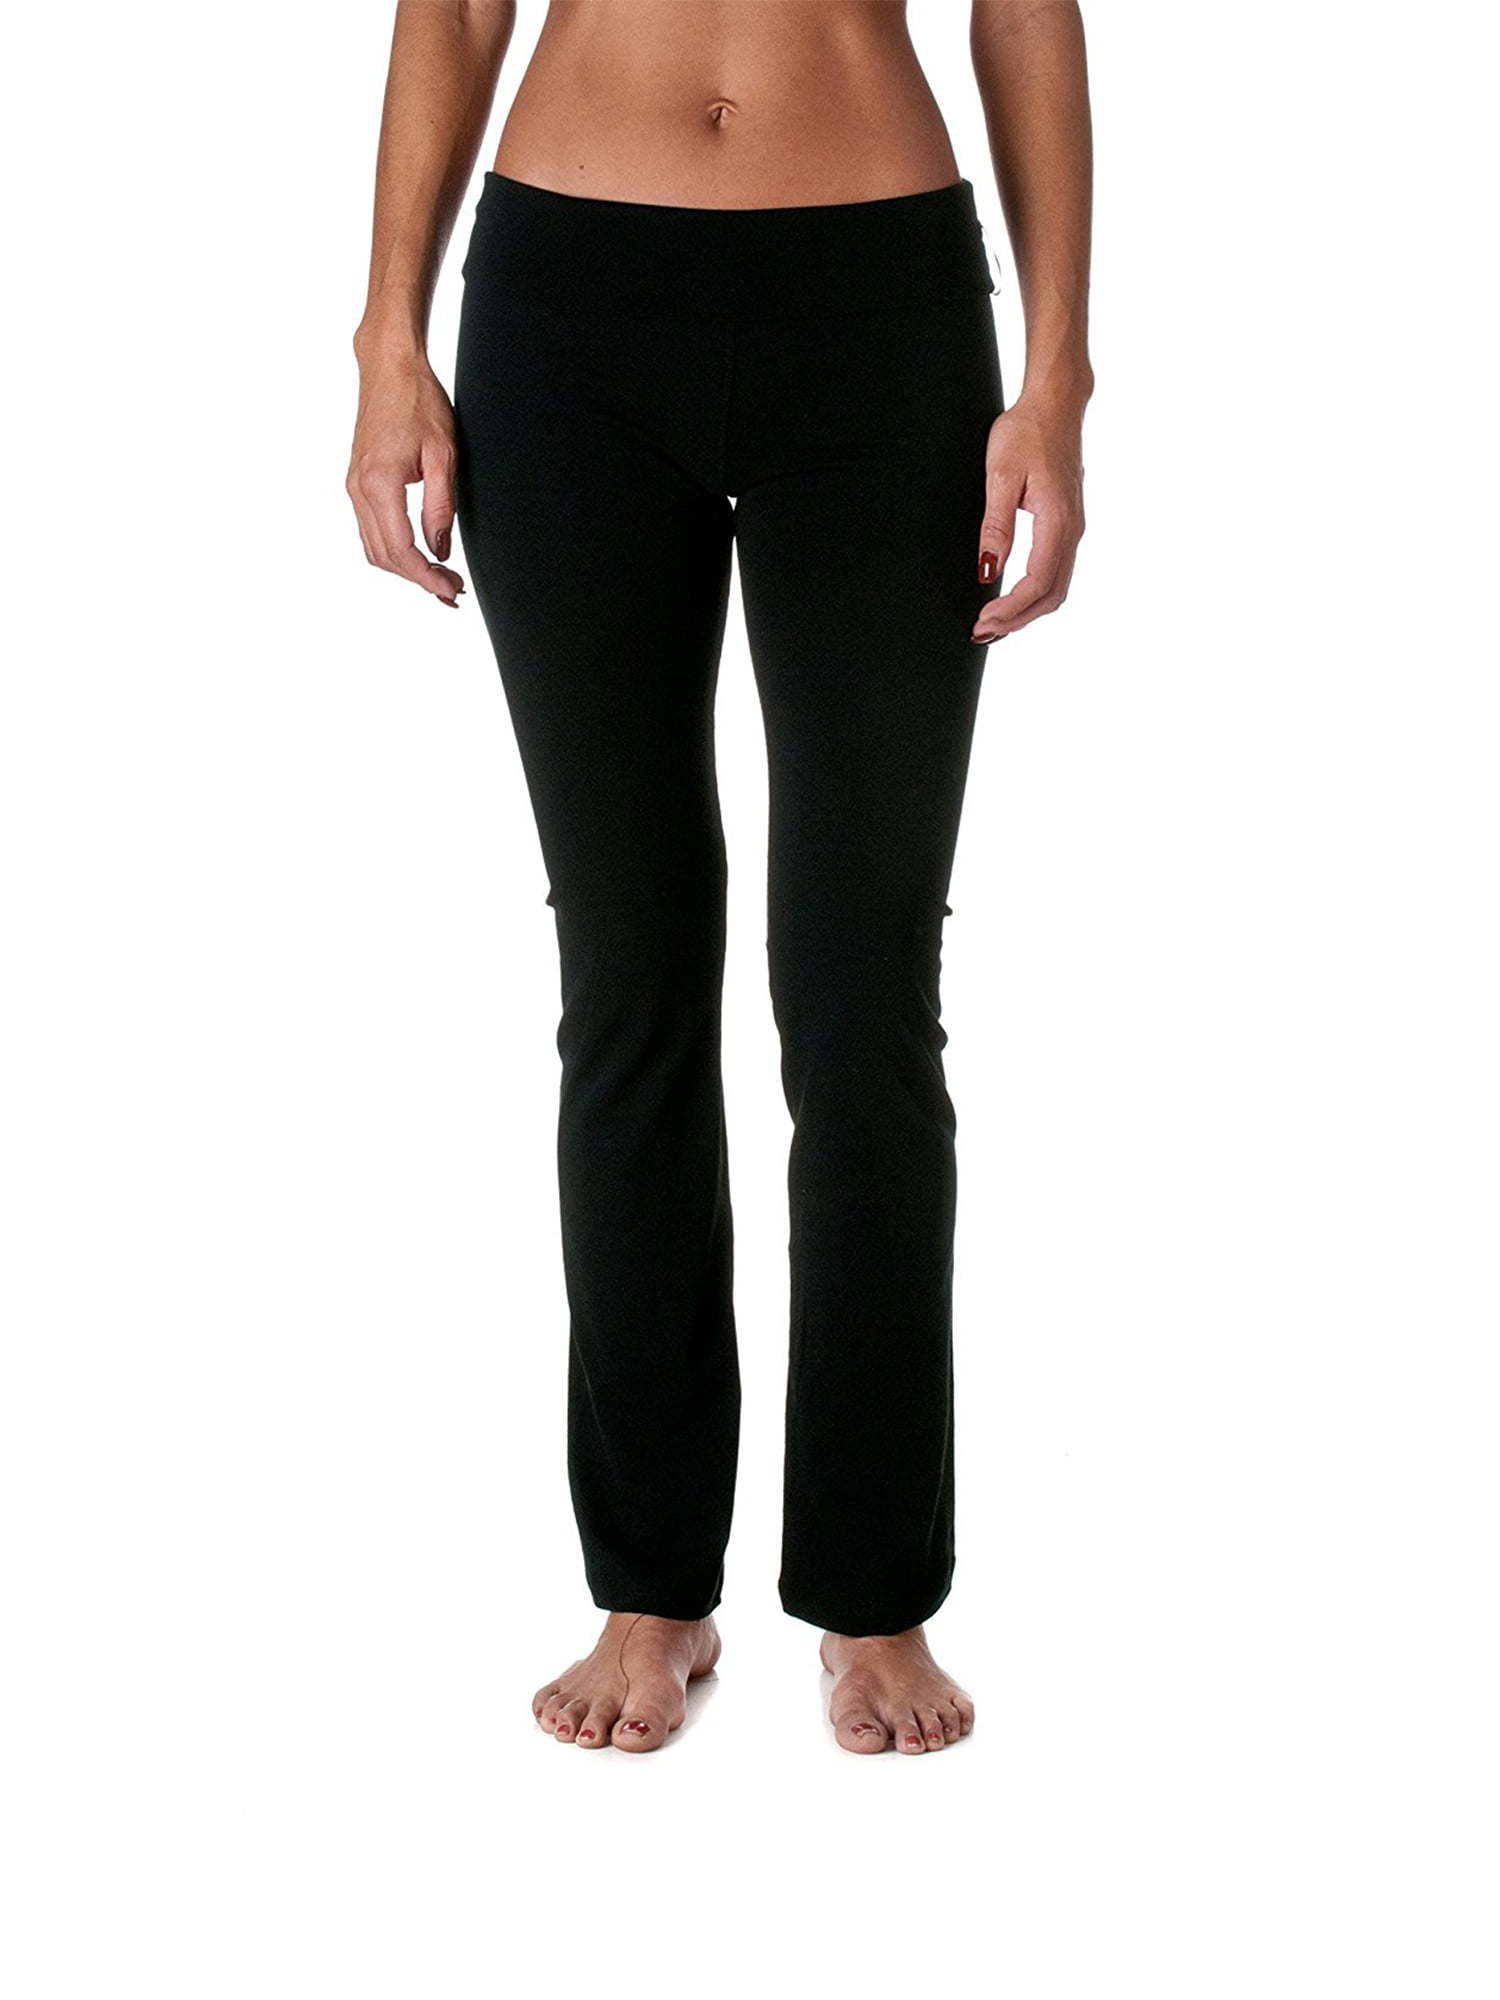 Casual Active Basic Women's Slimming Foldover Bootleg Flare Yoga Pants ...